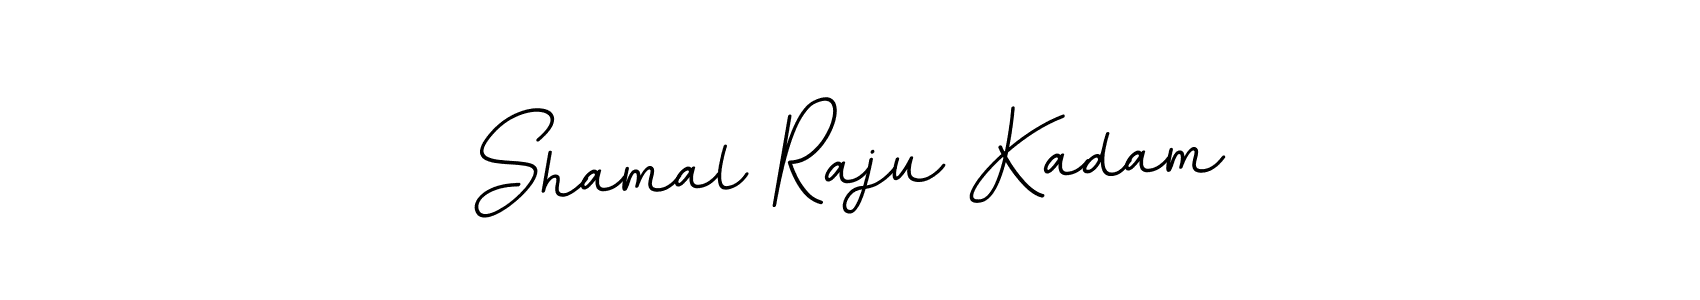 How to Draw Shamal Raju Kadam signature style? BallpointsItalic-DORy9 is a latest design signature styles for name Shamal Raju Kadam. Shamal Raju Kadam signature style 11 images and pictures png